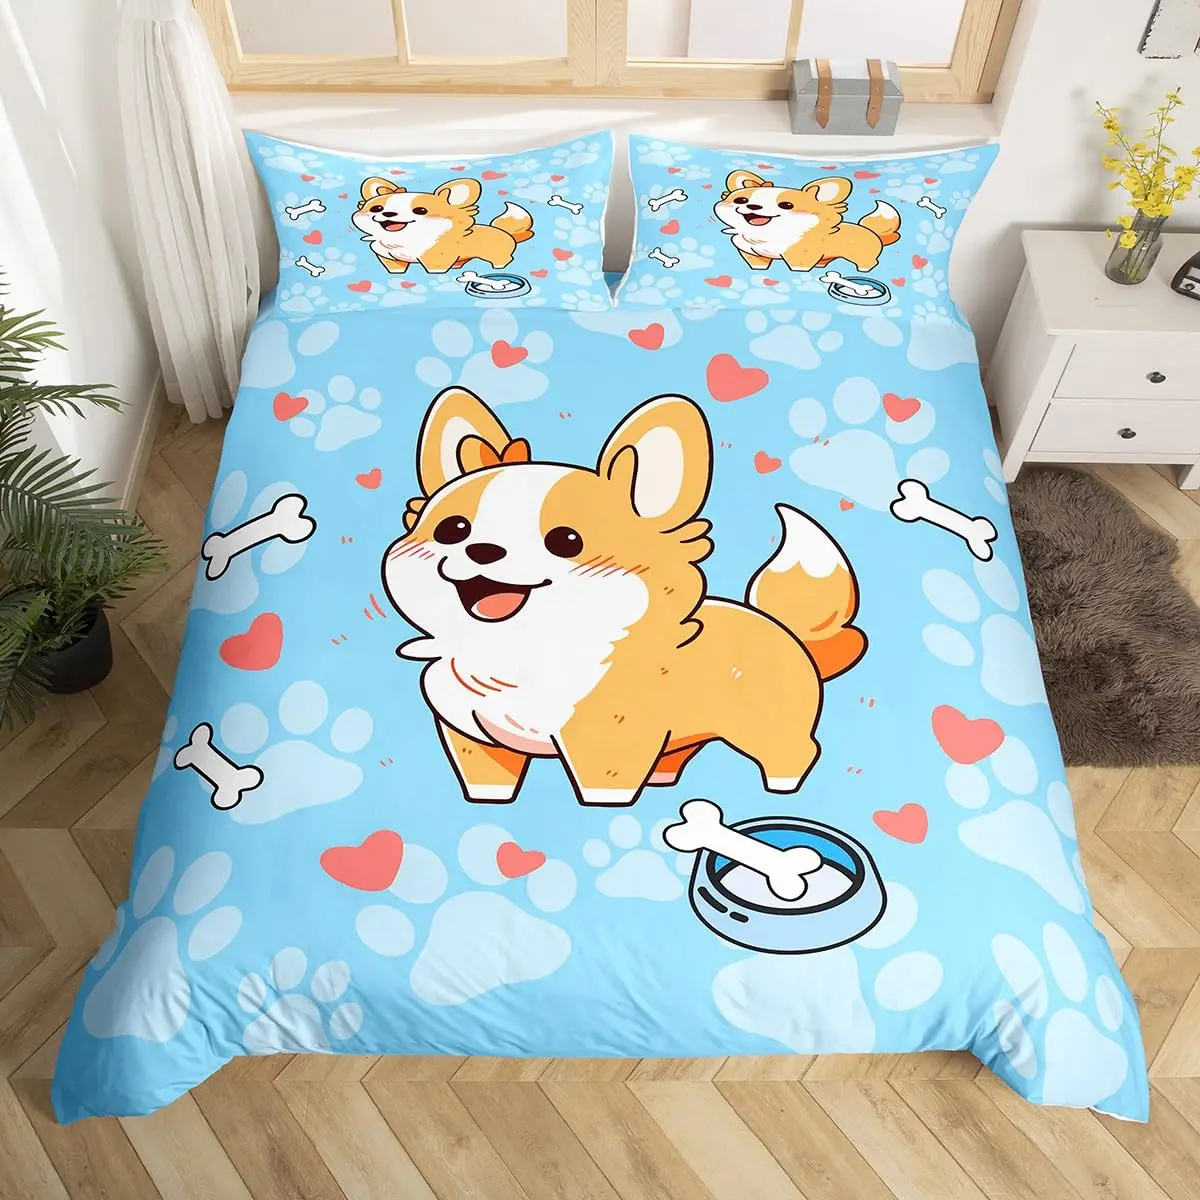 

Cute Corgi Duvet Cover Queen Size,Smiling Dog Bedding Set 3pcs for Kids Teens Boys Room Decor, Cartoon Puppy Paw Comforter Cover